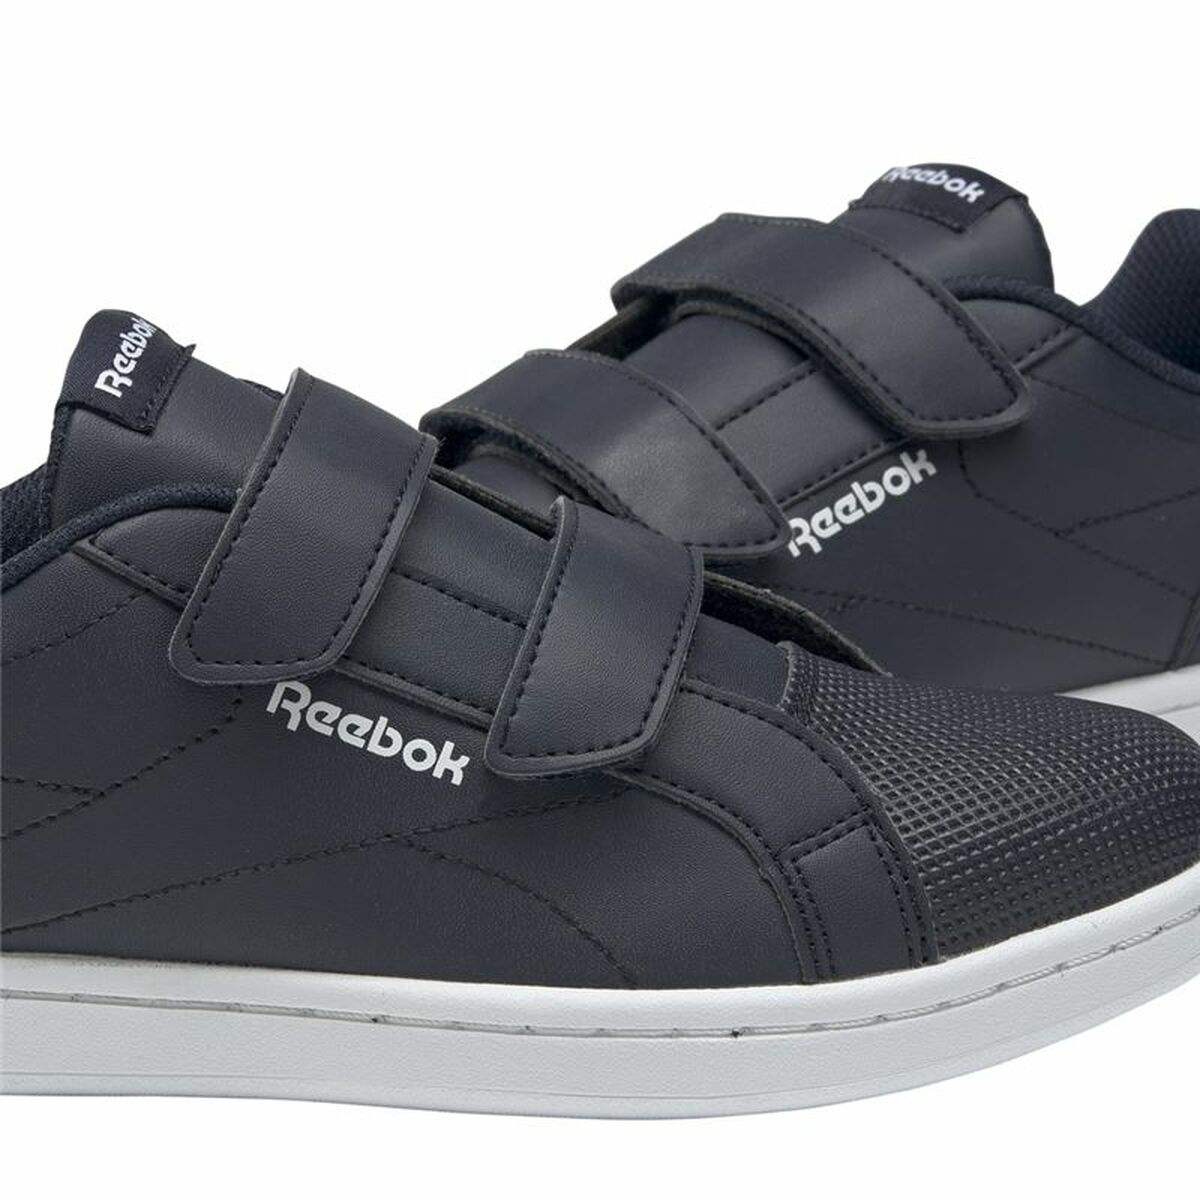 Chaussures de Sport pour Enfants Reebok Royal Complete Clean Noir - Reebok - Jardin D'Eyden - jardindeyden.fr